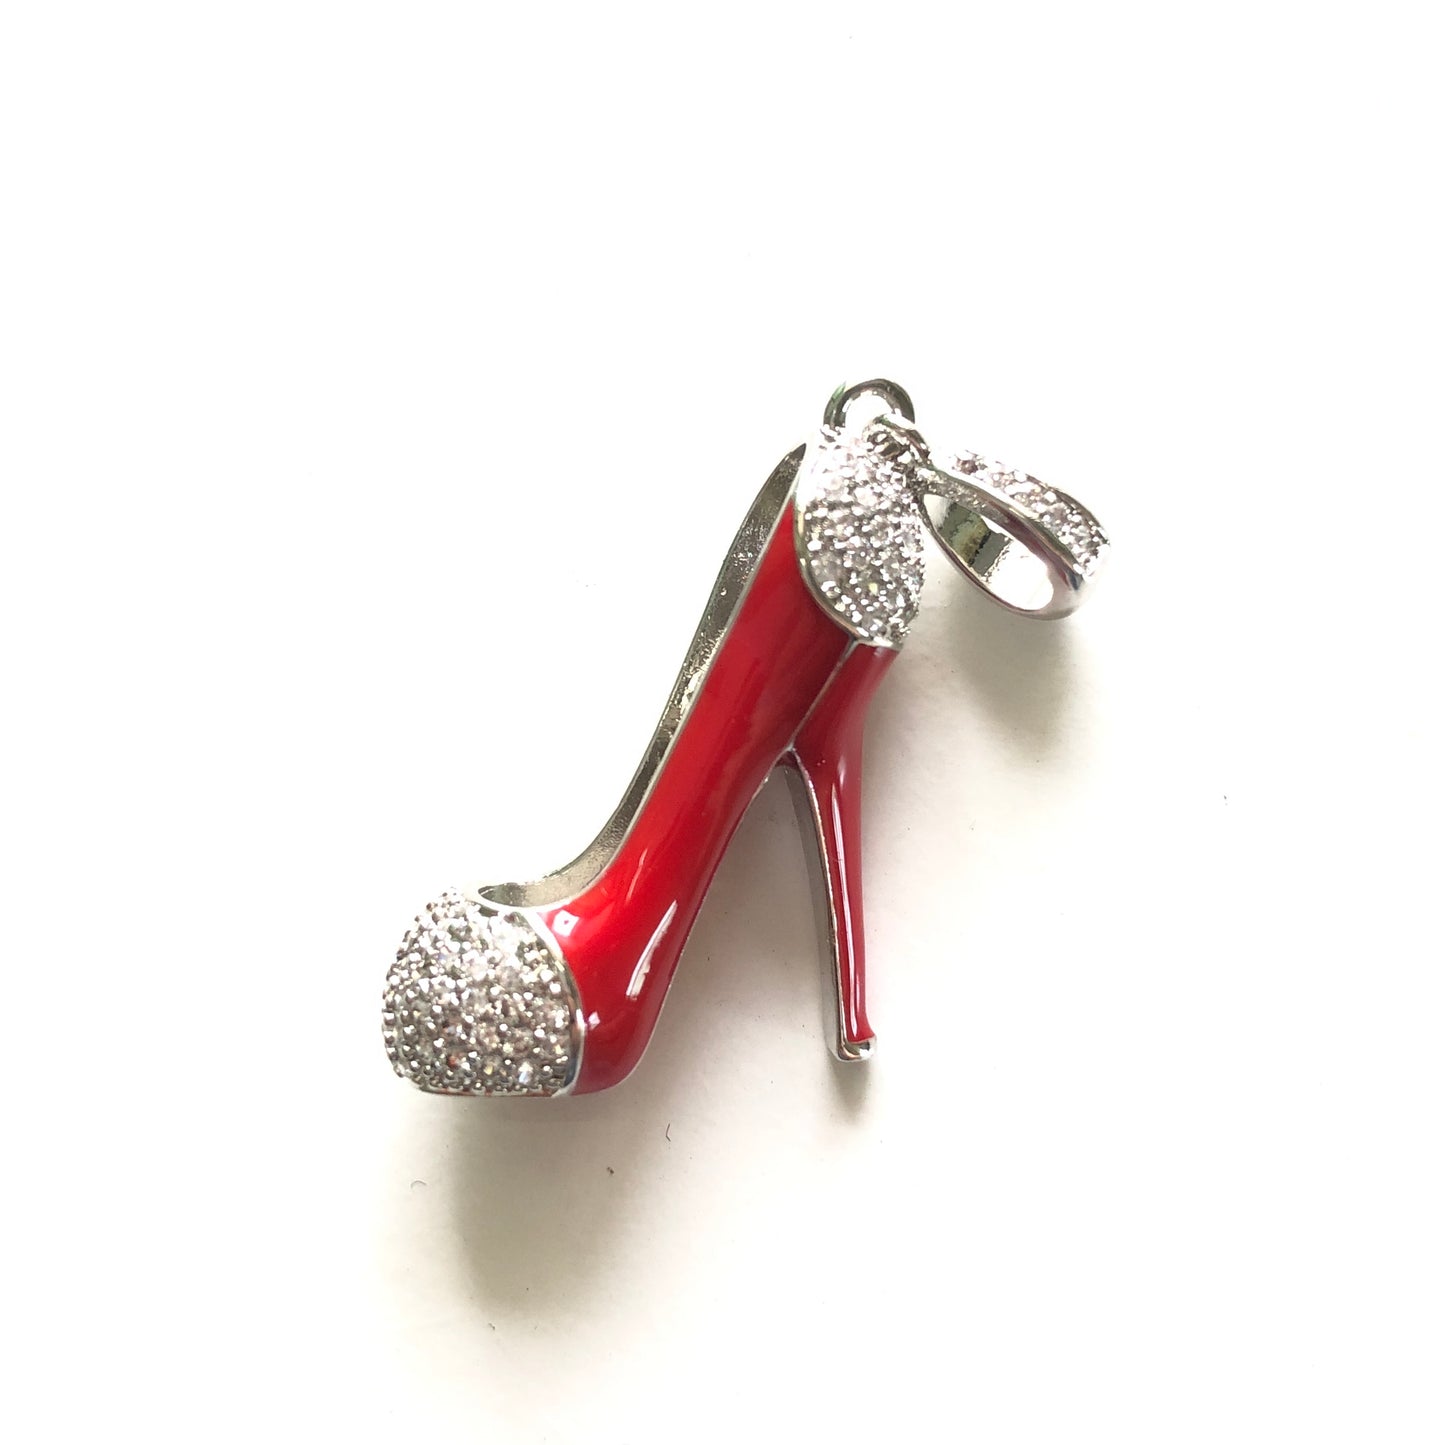 10pcs/lot 30*26mm CZ Paved Red High Heel Shoe Charms Silver CZ Paved Charms High Heels On Sale Charms Beads Beyond